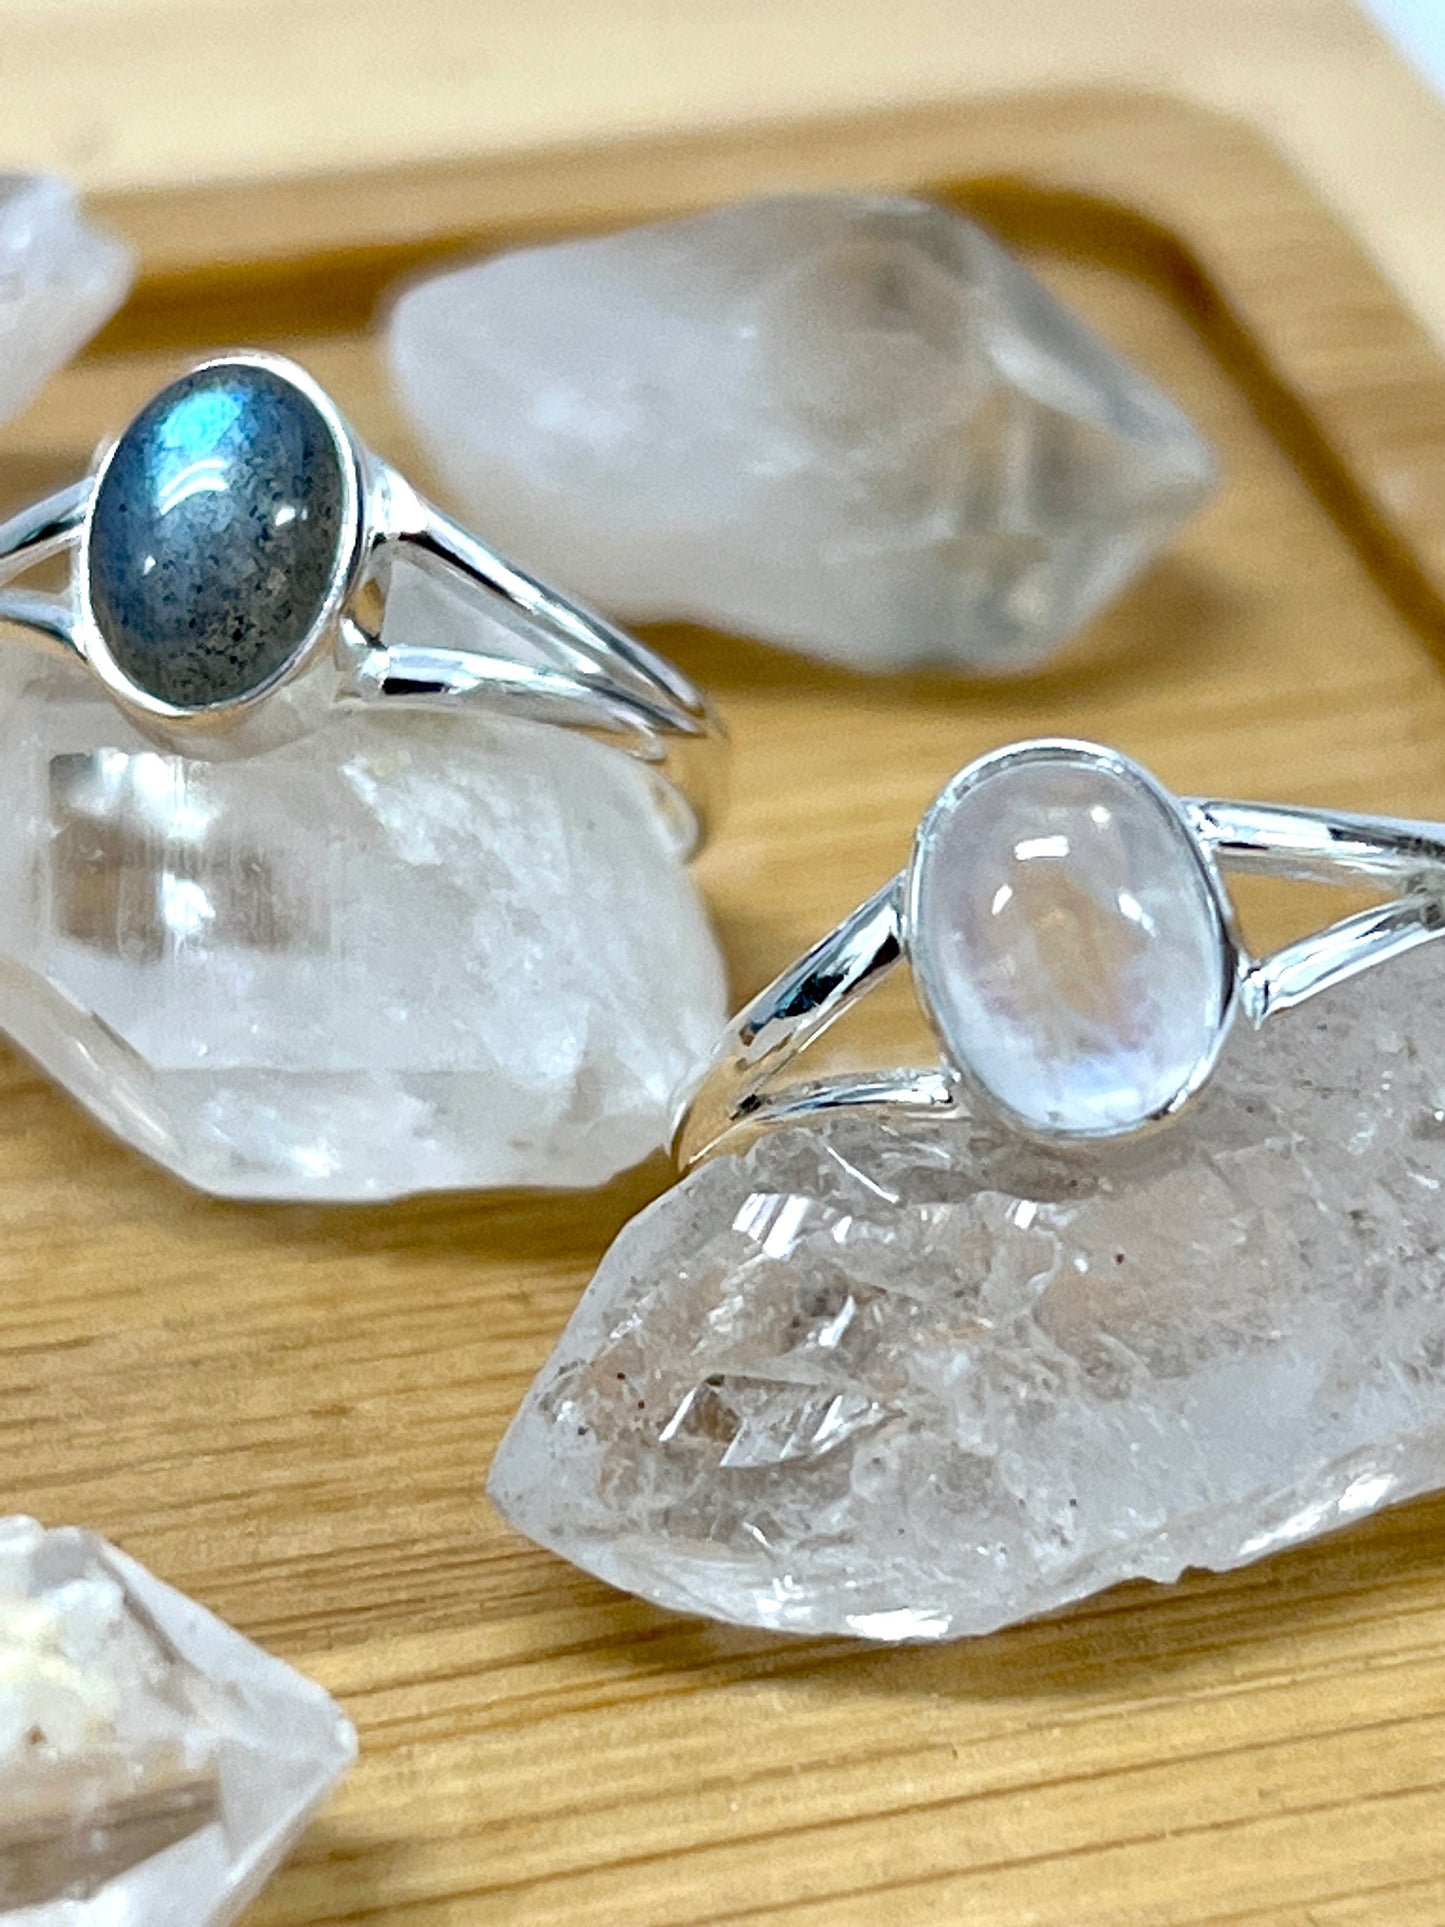 Minimalist Moonstone or Labradorite ring in sterling silver.